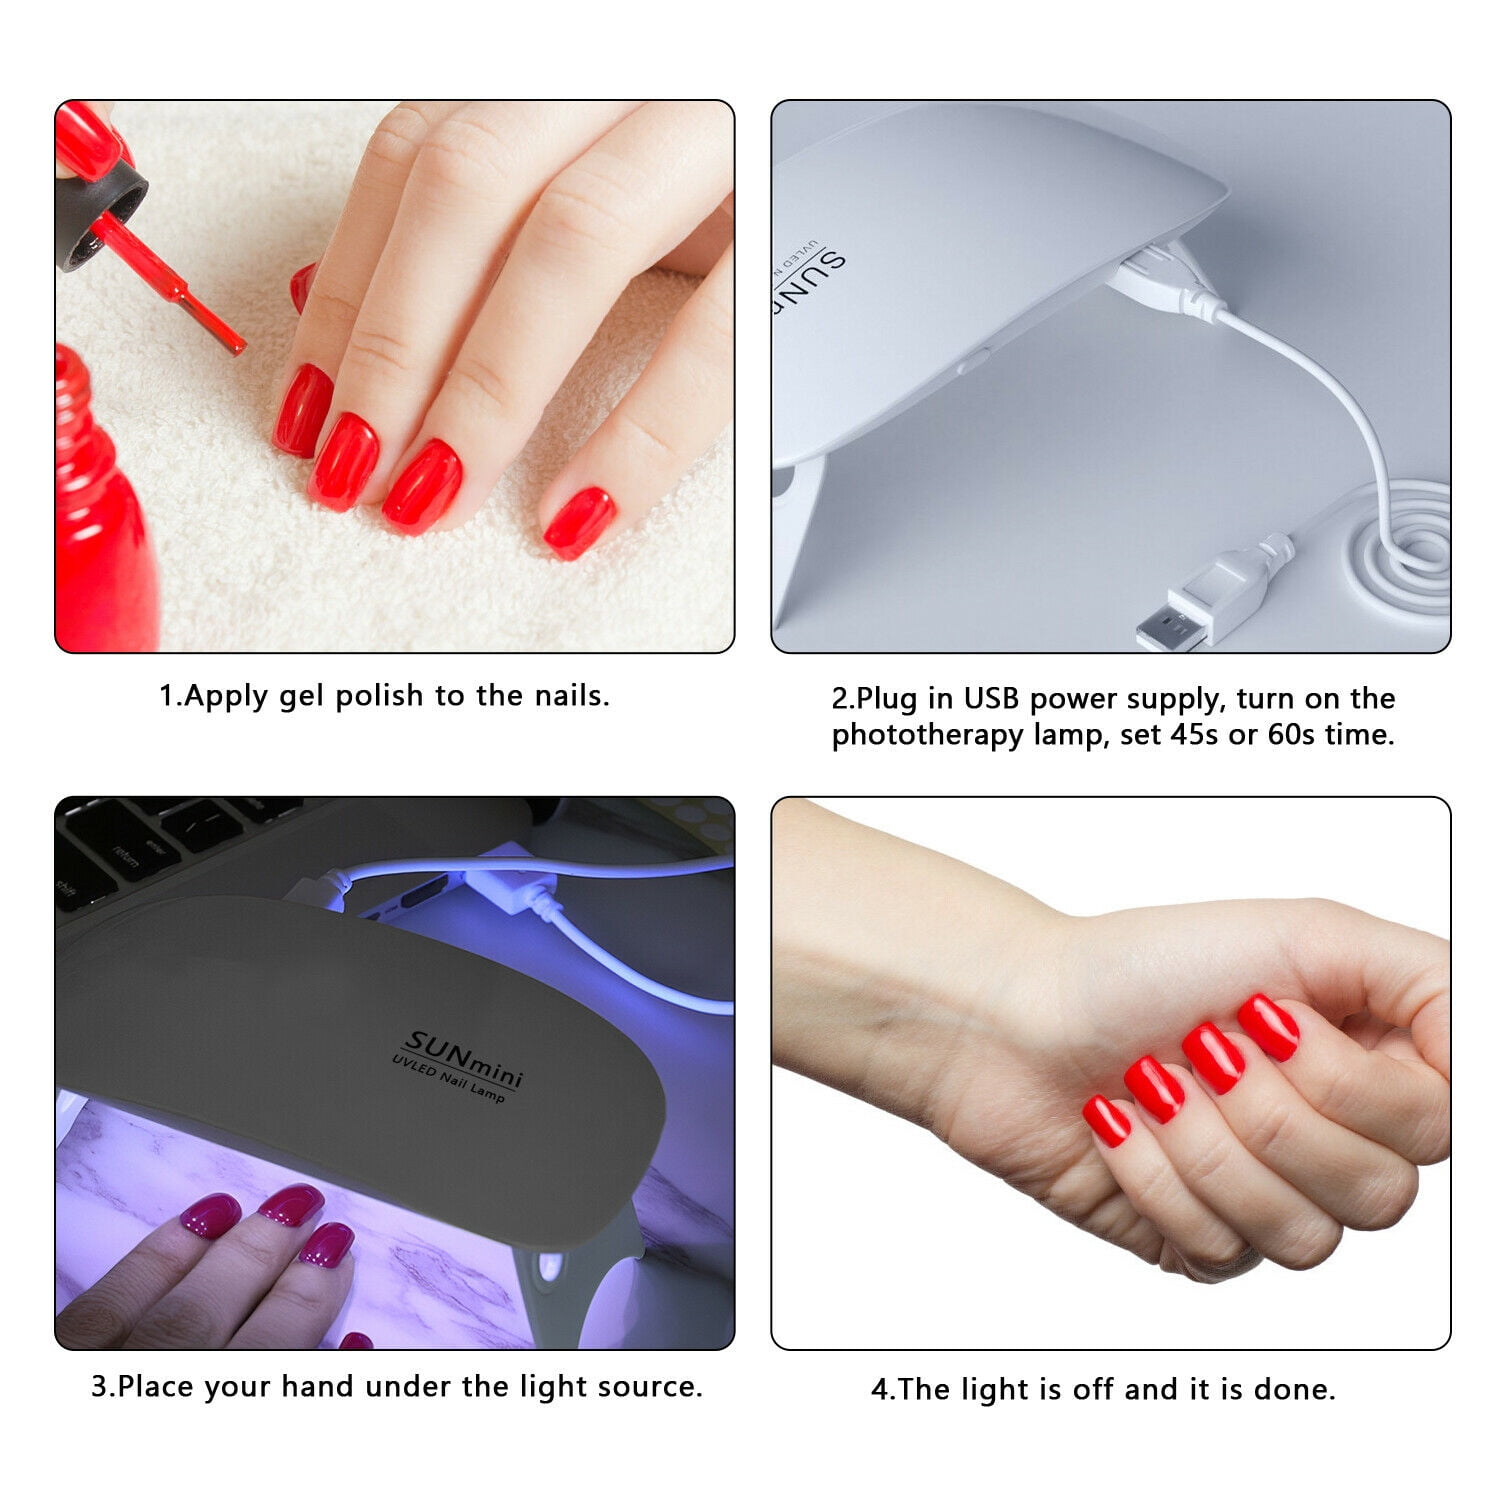 URAQT Mini Gel Nail Lamp, Portable Professional 6W UV LED Gel Nail Dryer  with USB, Curing Lamp Professional Nail Art Tool Accessory for All Gel Nail